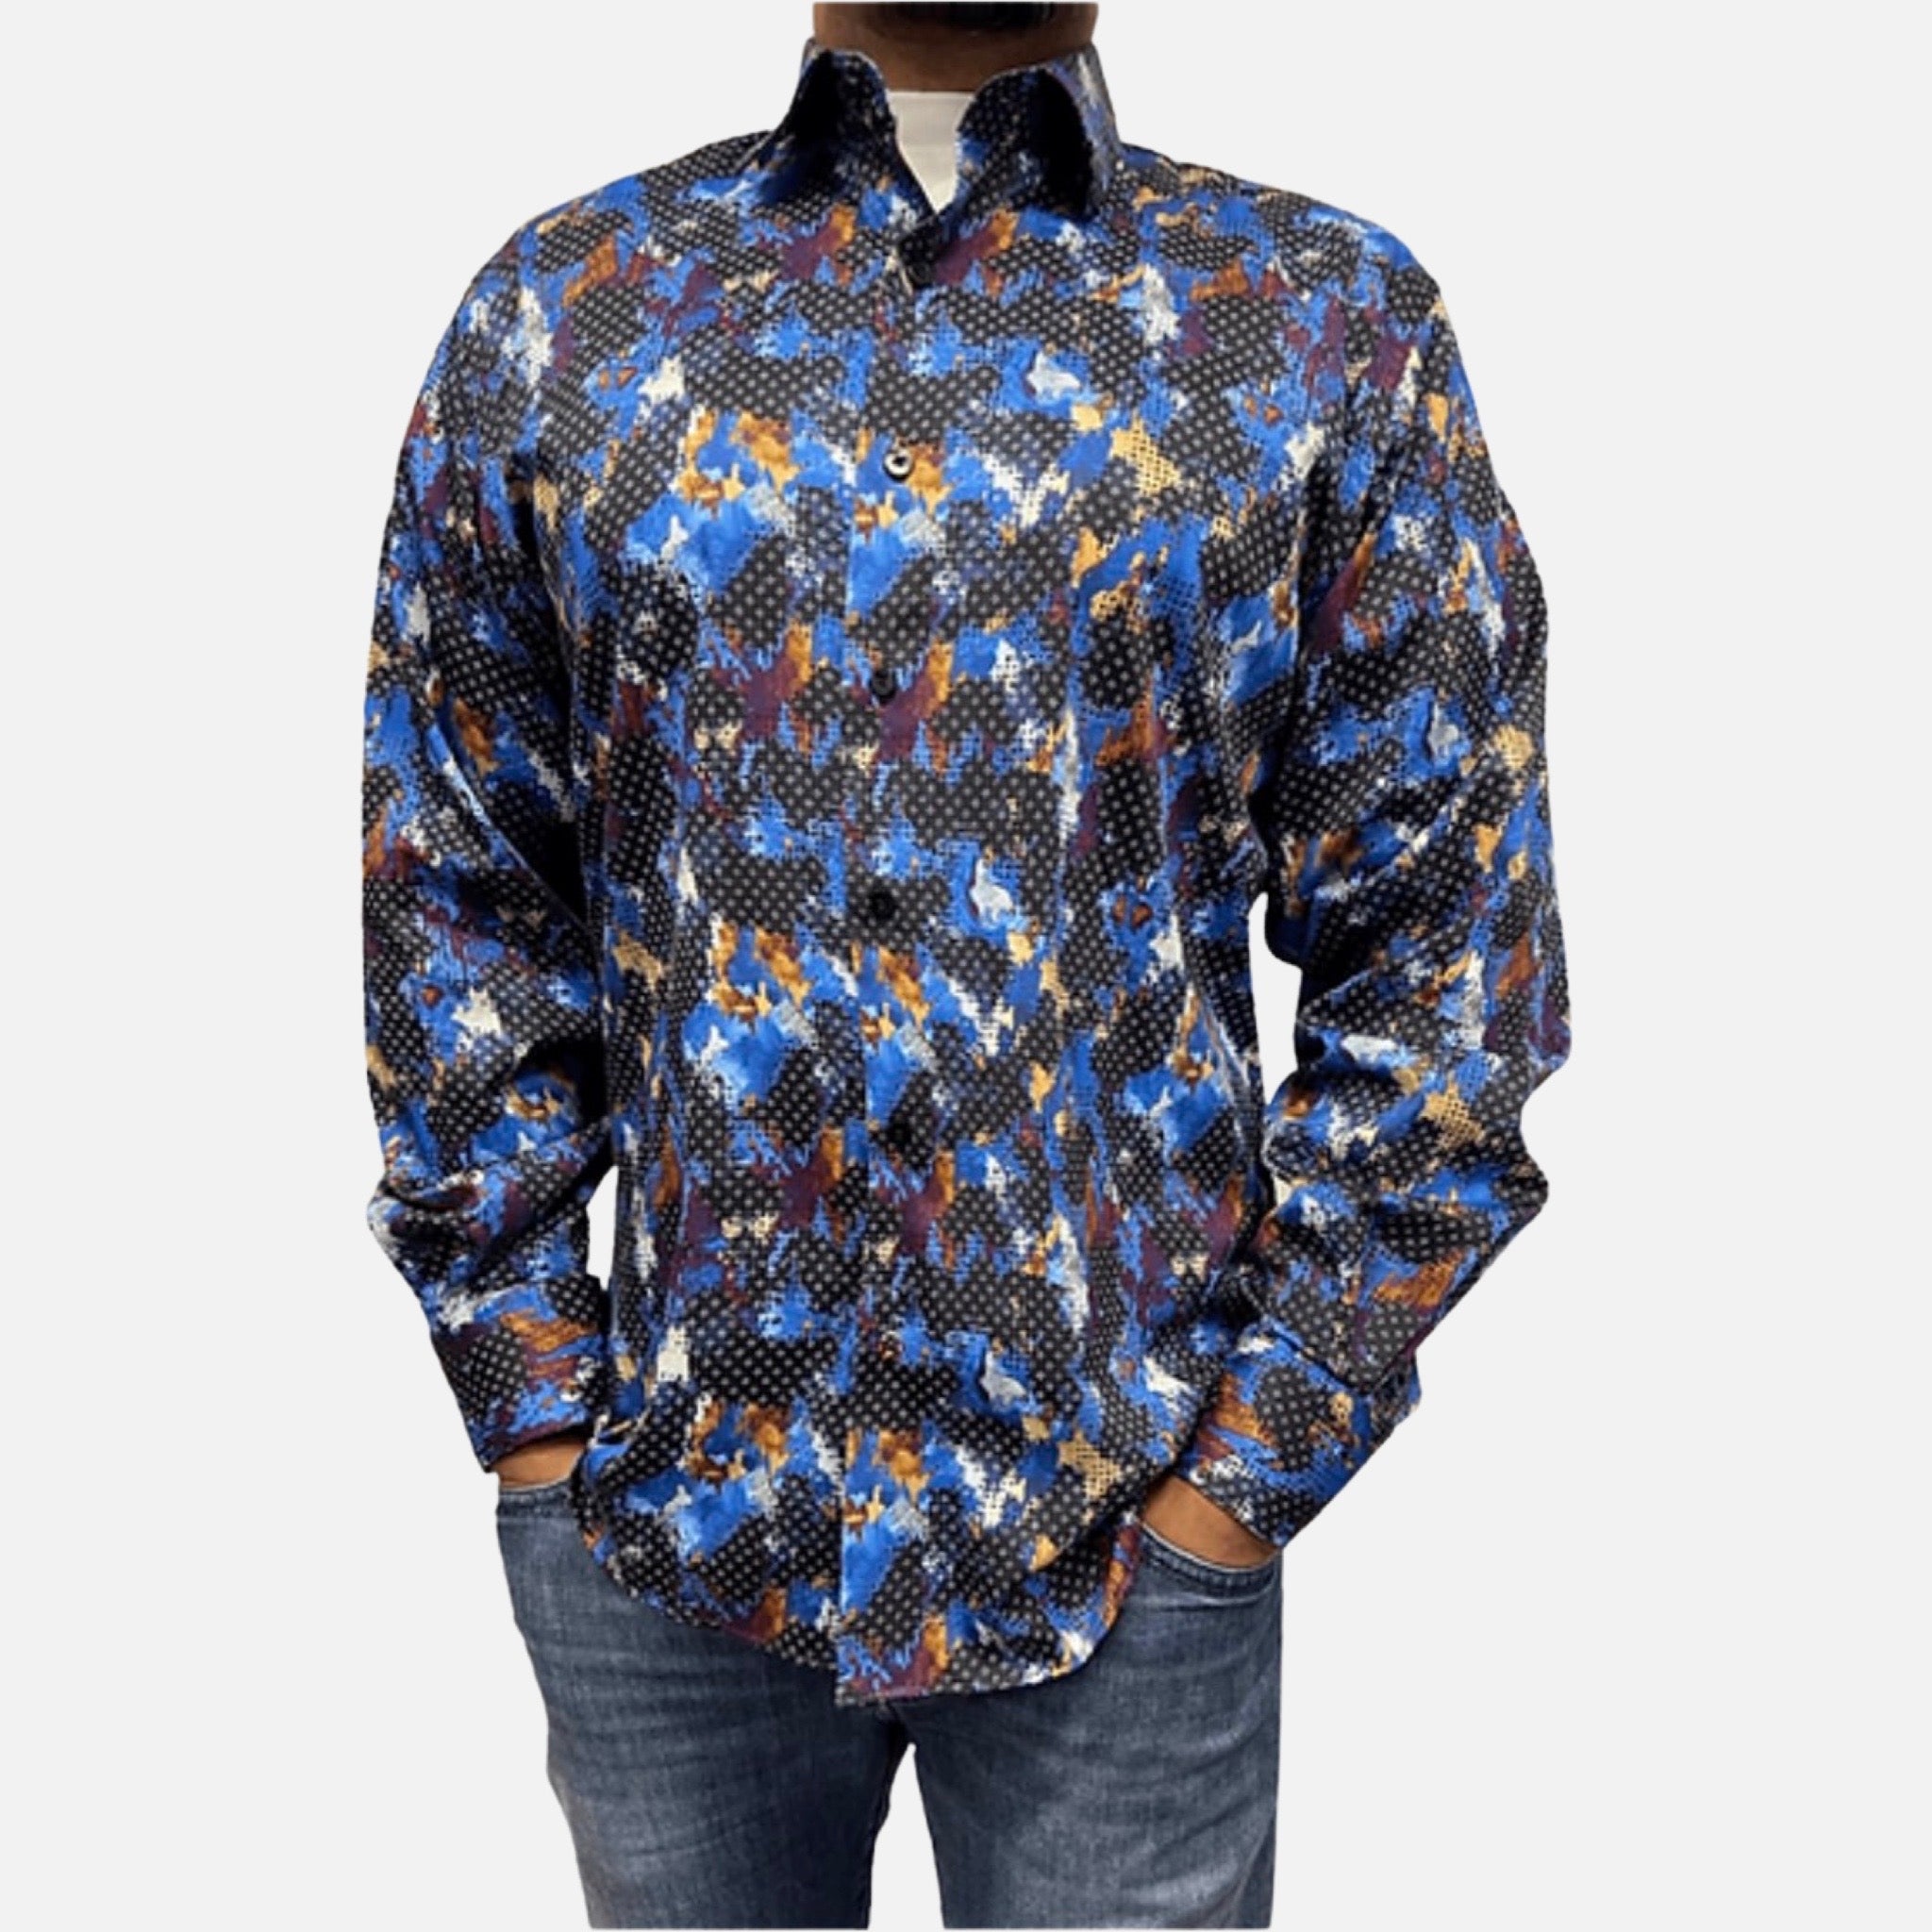 Men's Navy Blue Button-Down Shirt by Luchiano Visconti 4756